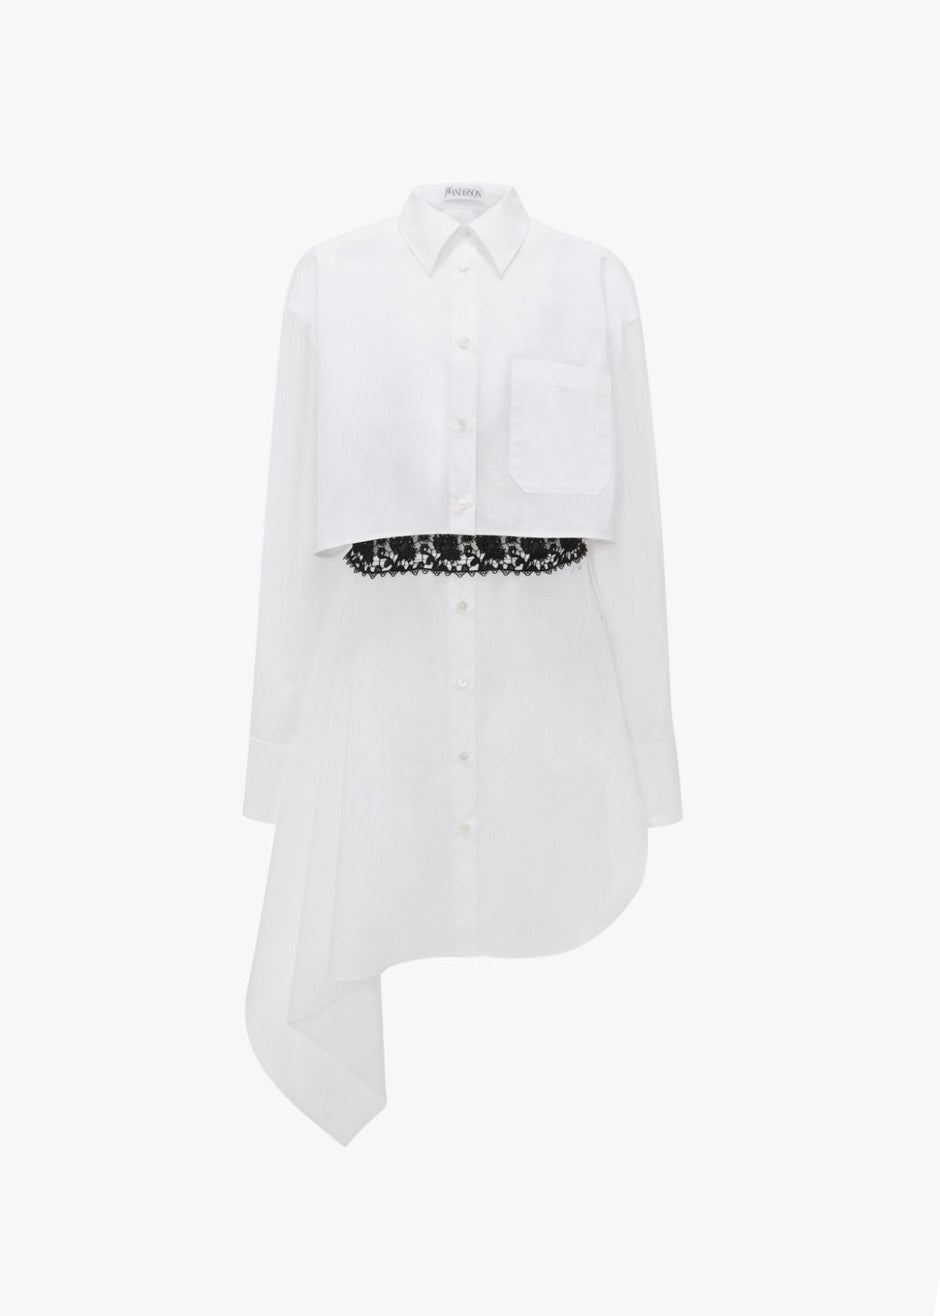 JW Anderson Lace Insert Shirt Dress - White/Black - 7